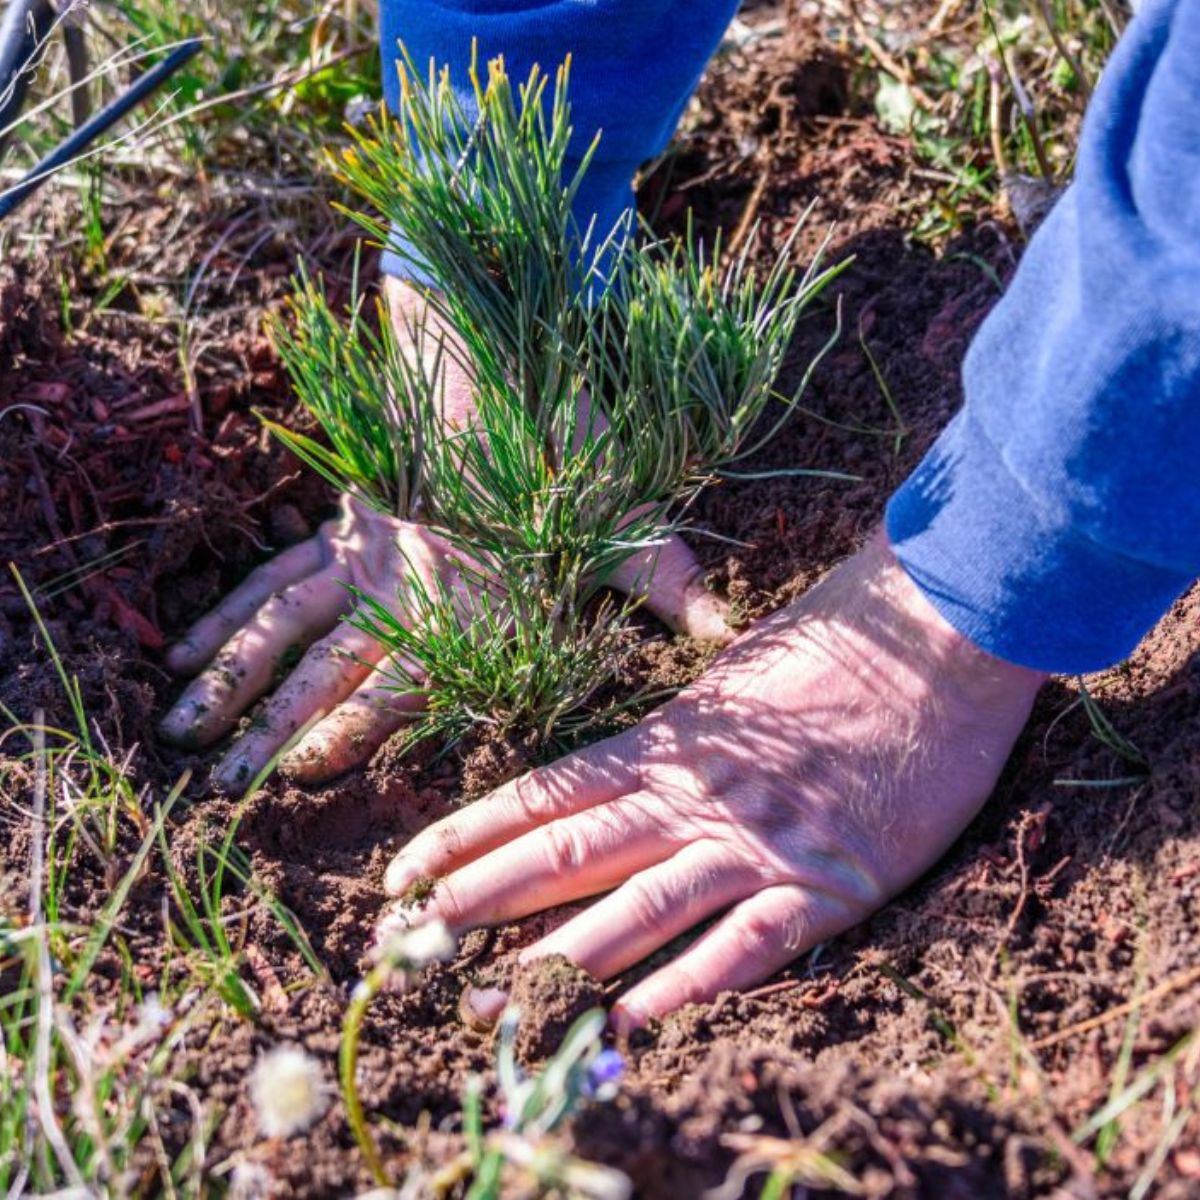 A gardener plants pine tree seedlings in the soil.